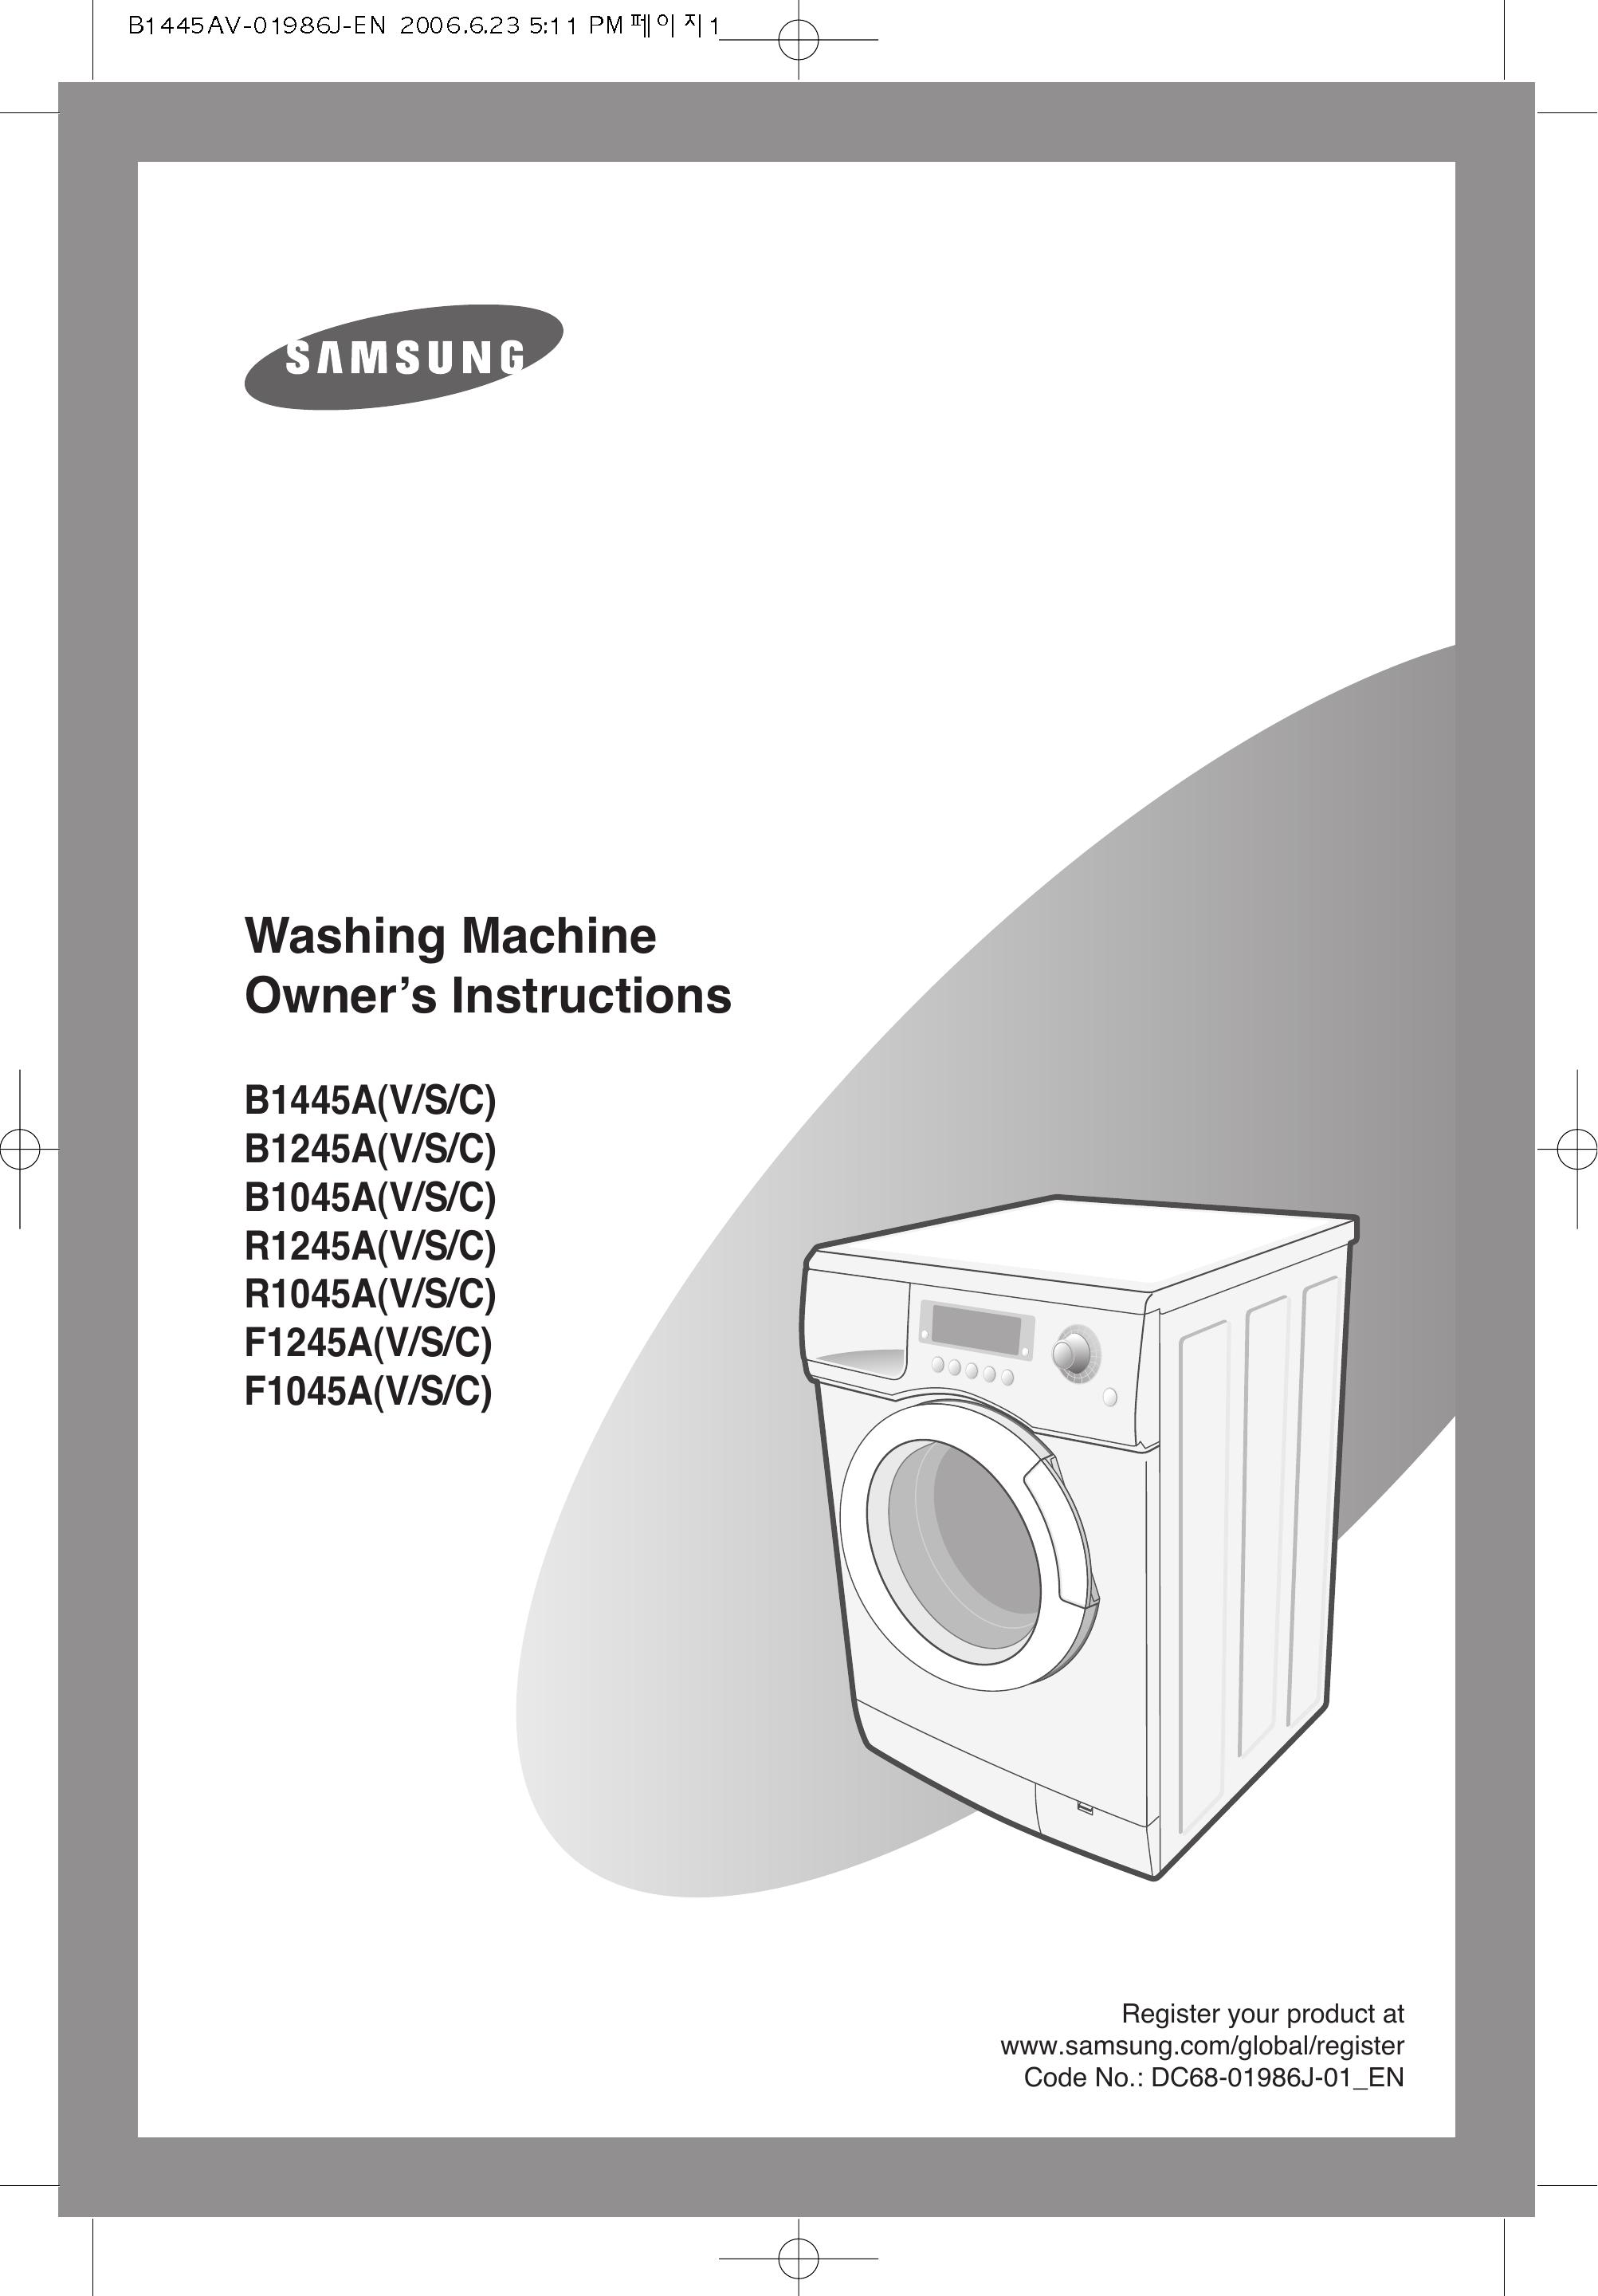 Samsung B1045A(V/S/C) Washer User Manual